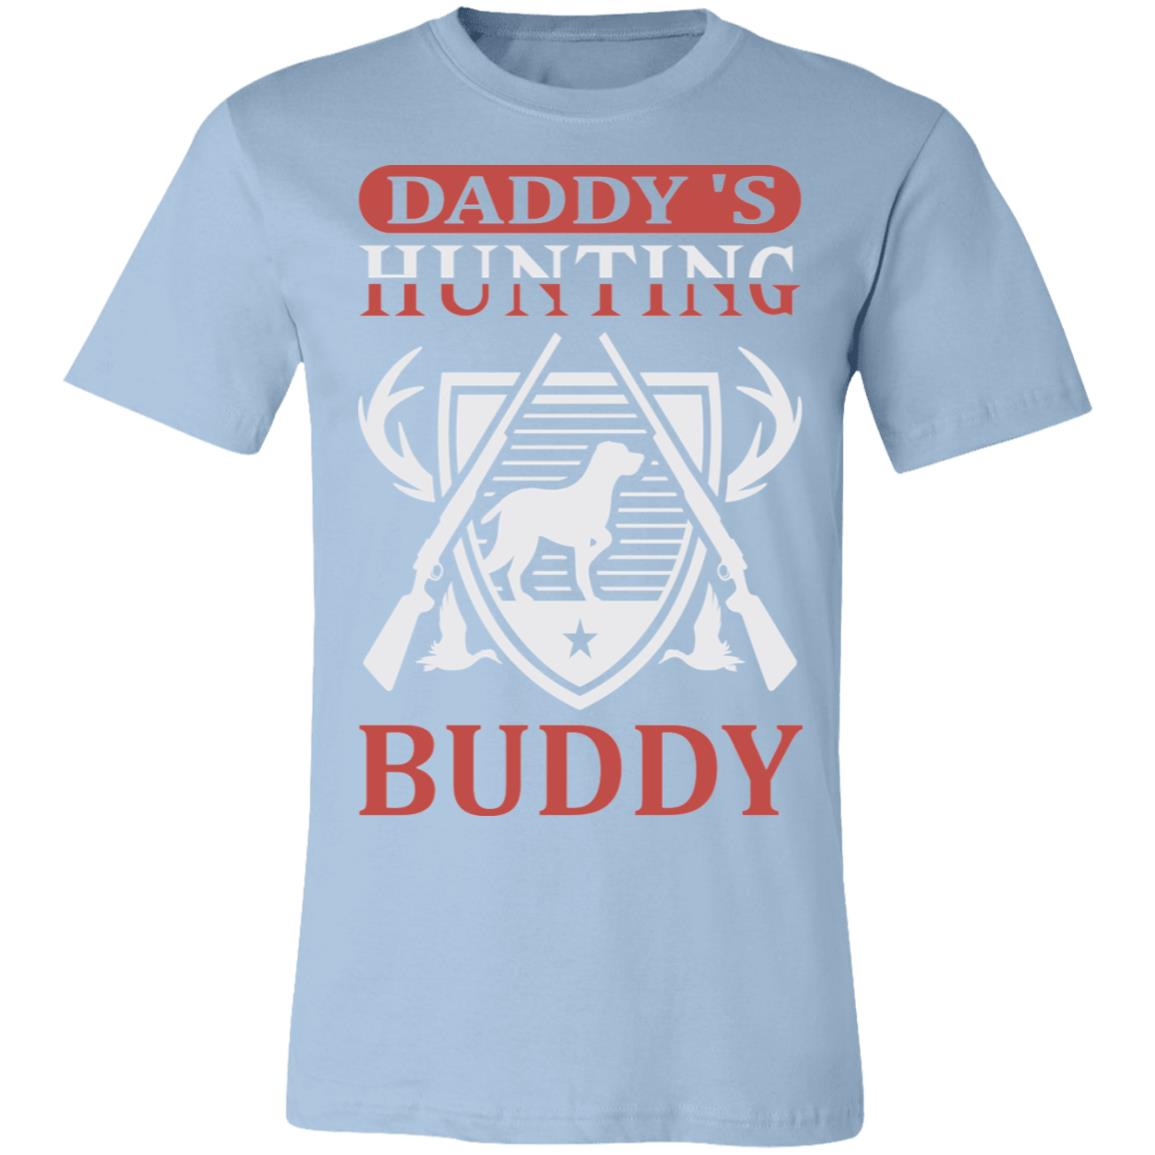 Hunting Buddy Dog and Guns Hunter Gift T-Shirt-Express Your Love Gifts